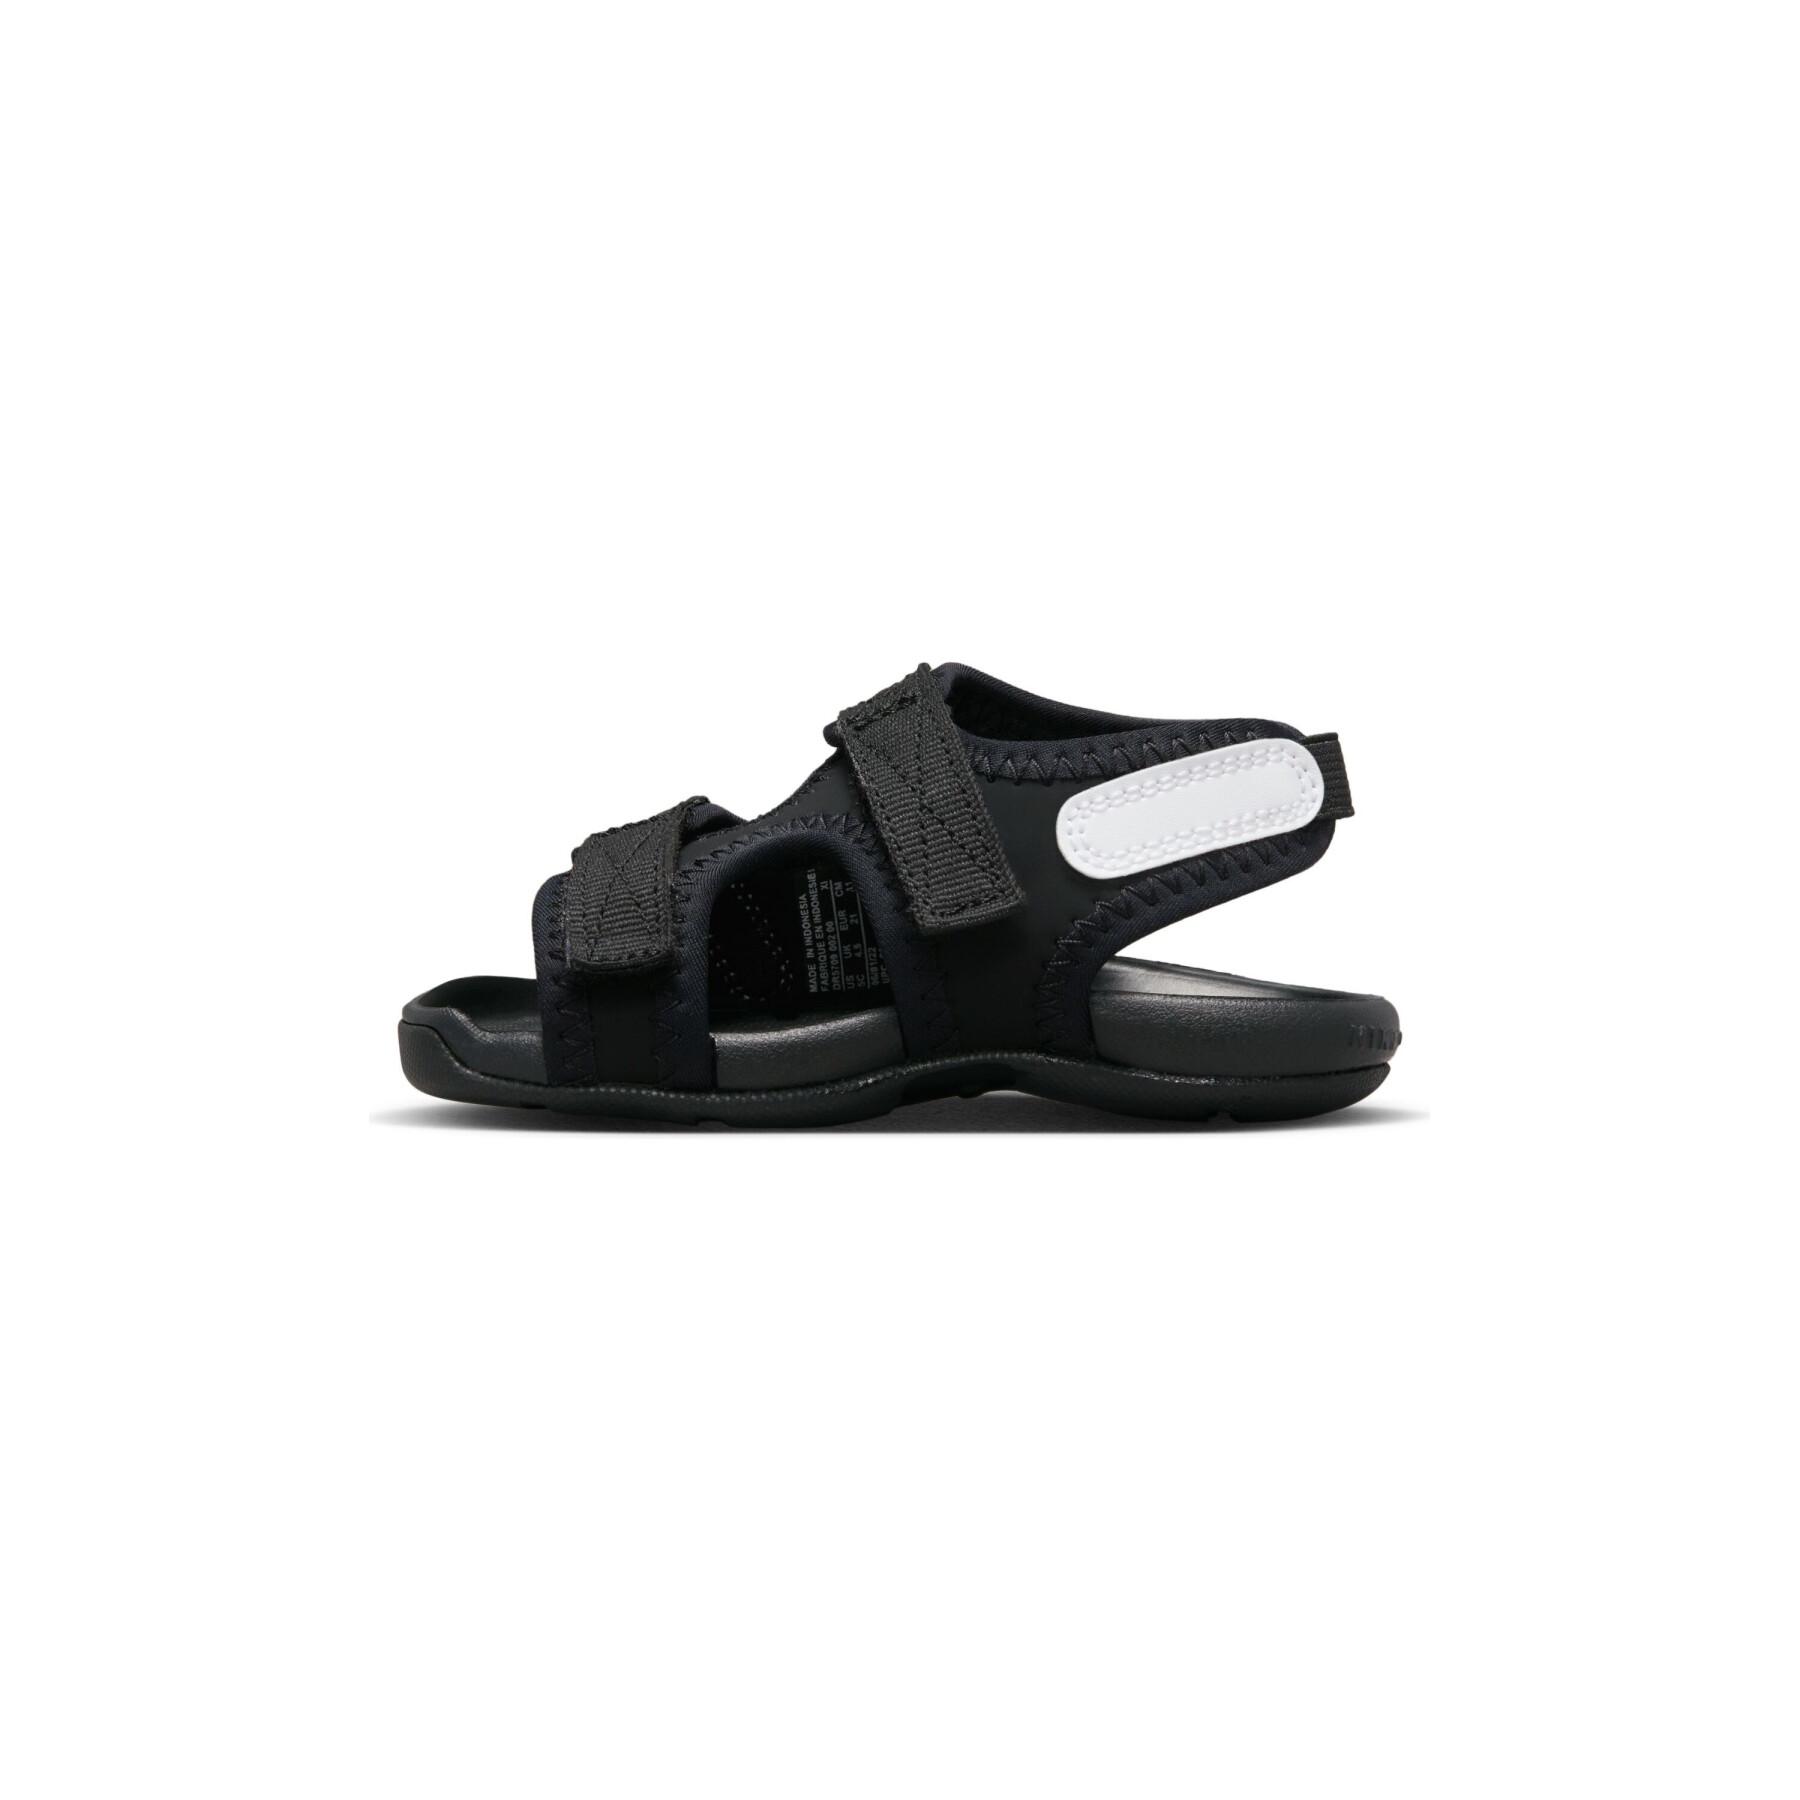 Baby boy sandals Nike Sunray Adjust 6